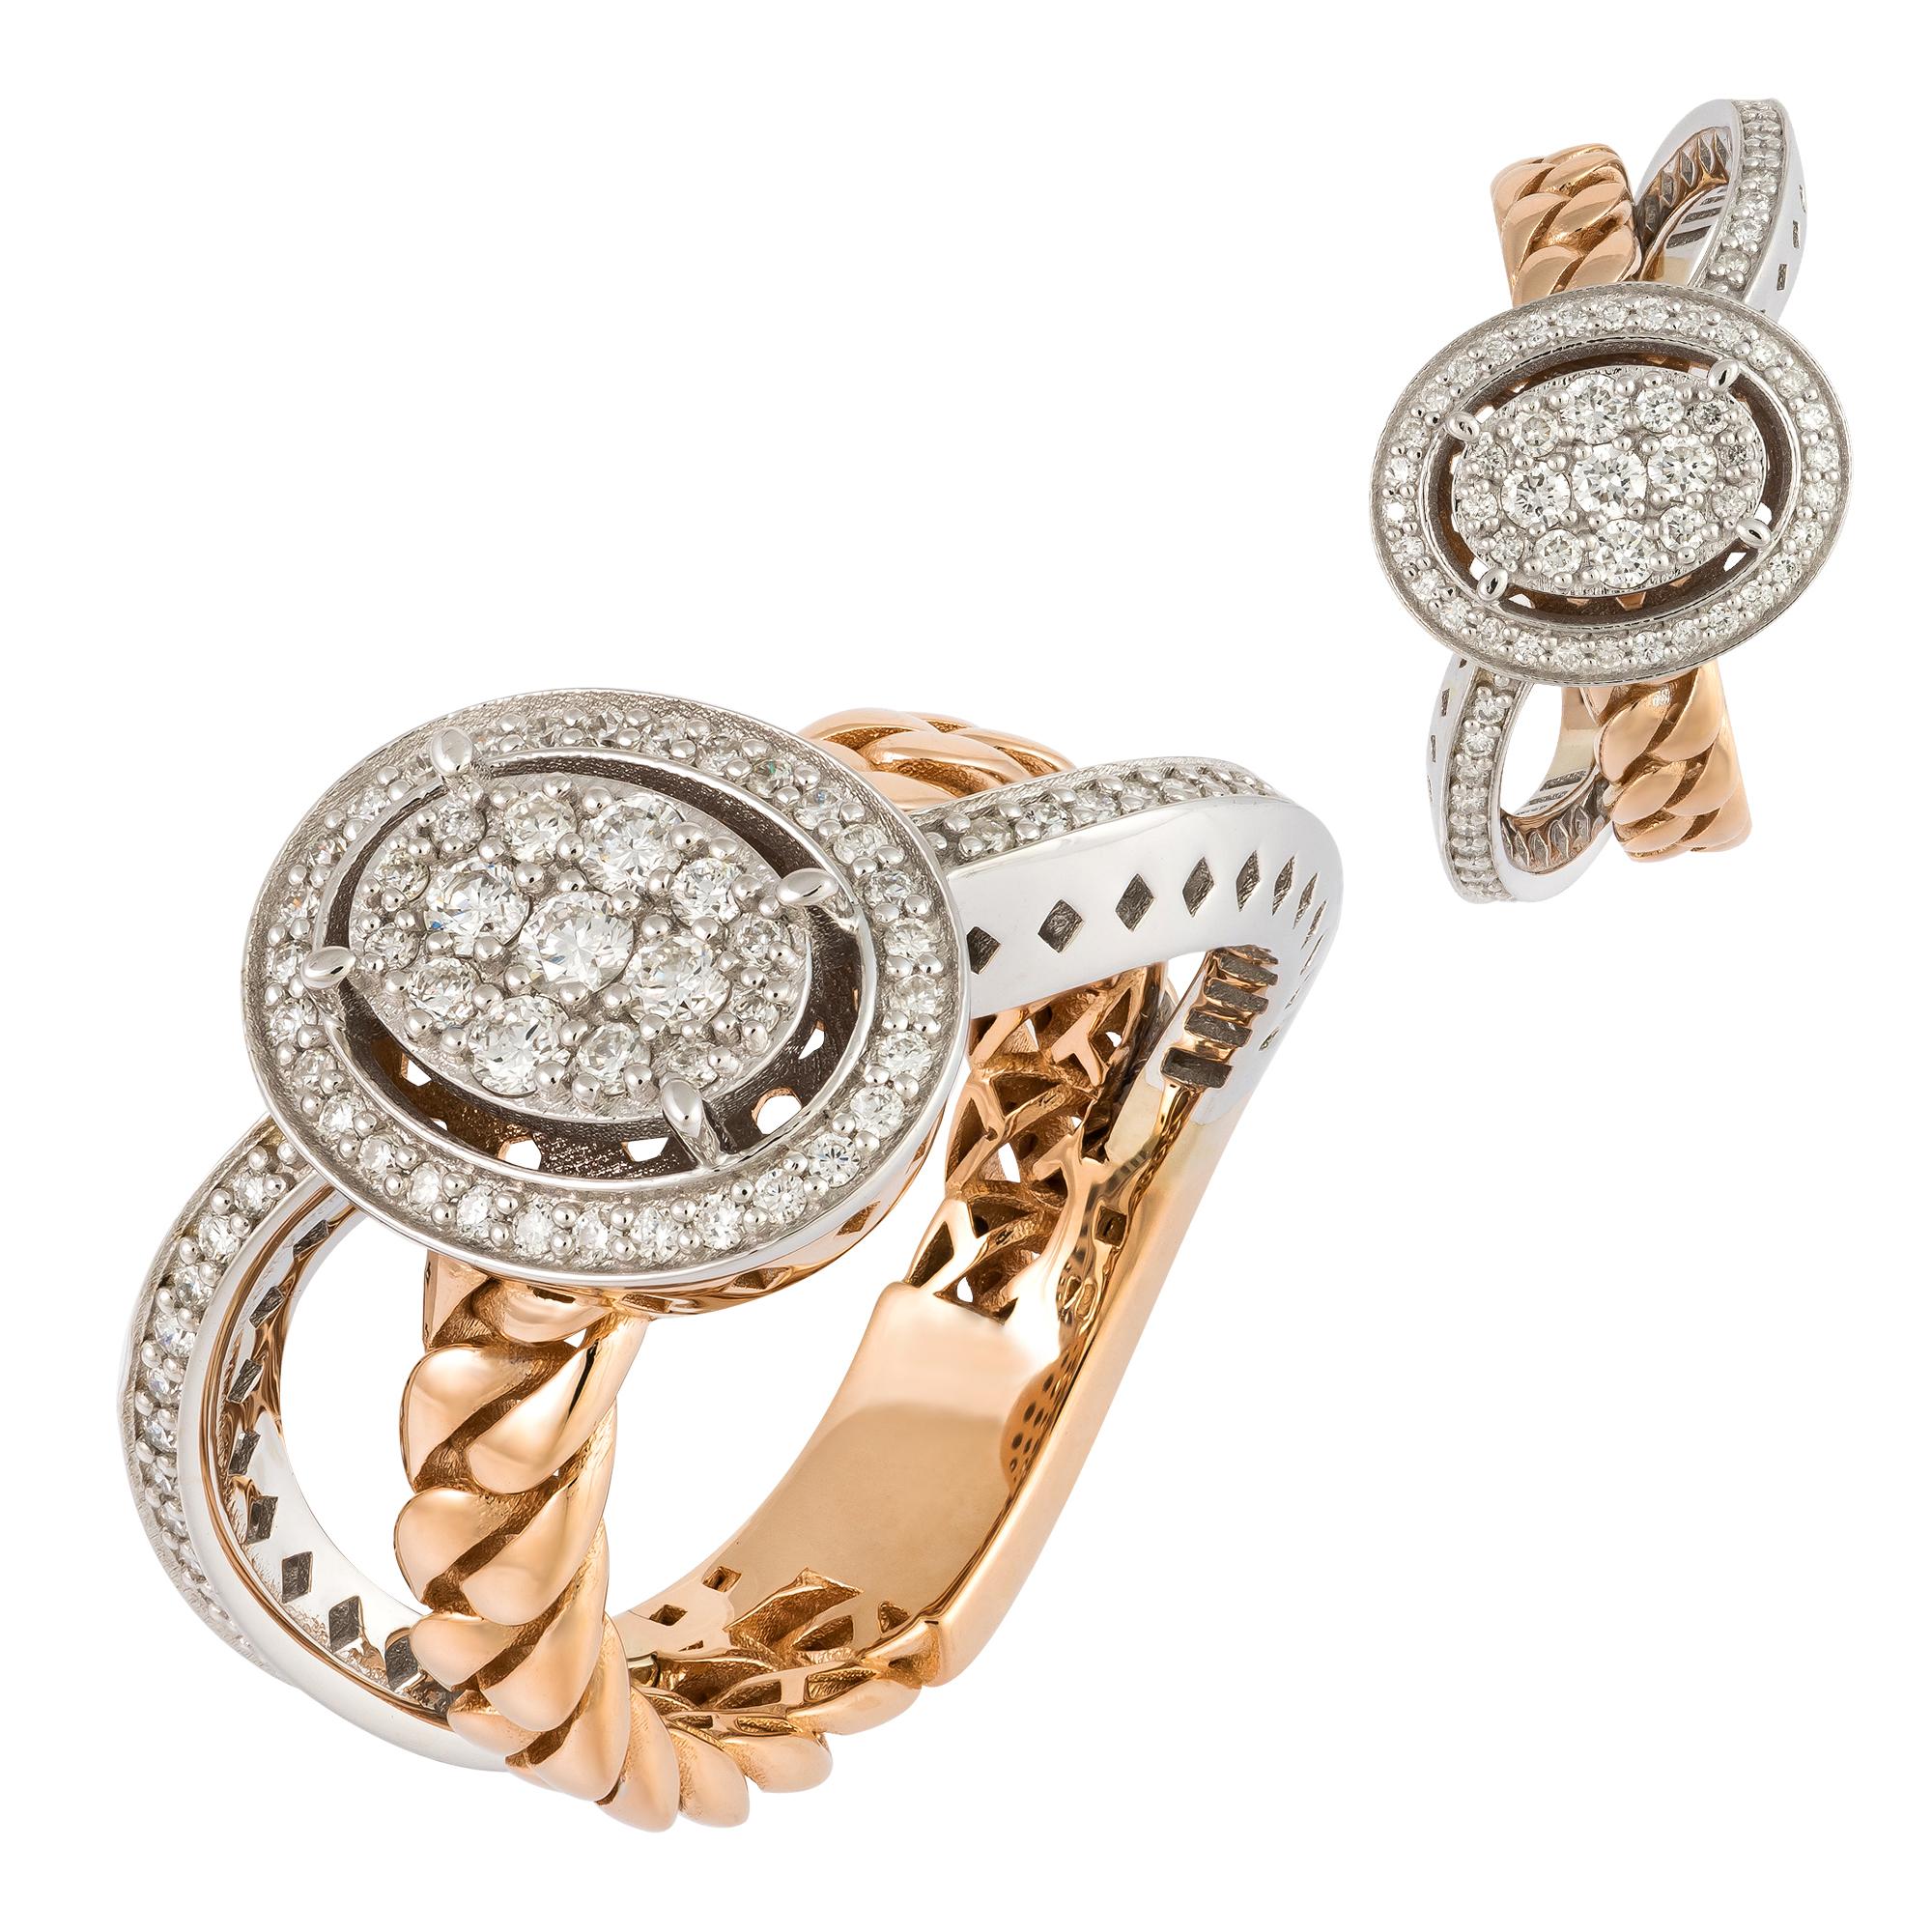 For Sale:  Stunning White Pink 18K Gold White Diamond Ring for Her 4